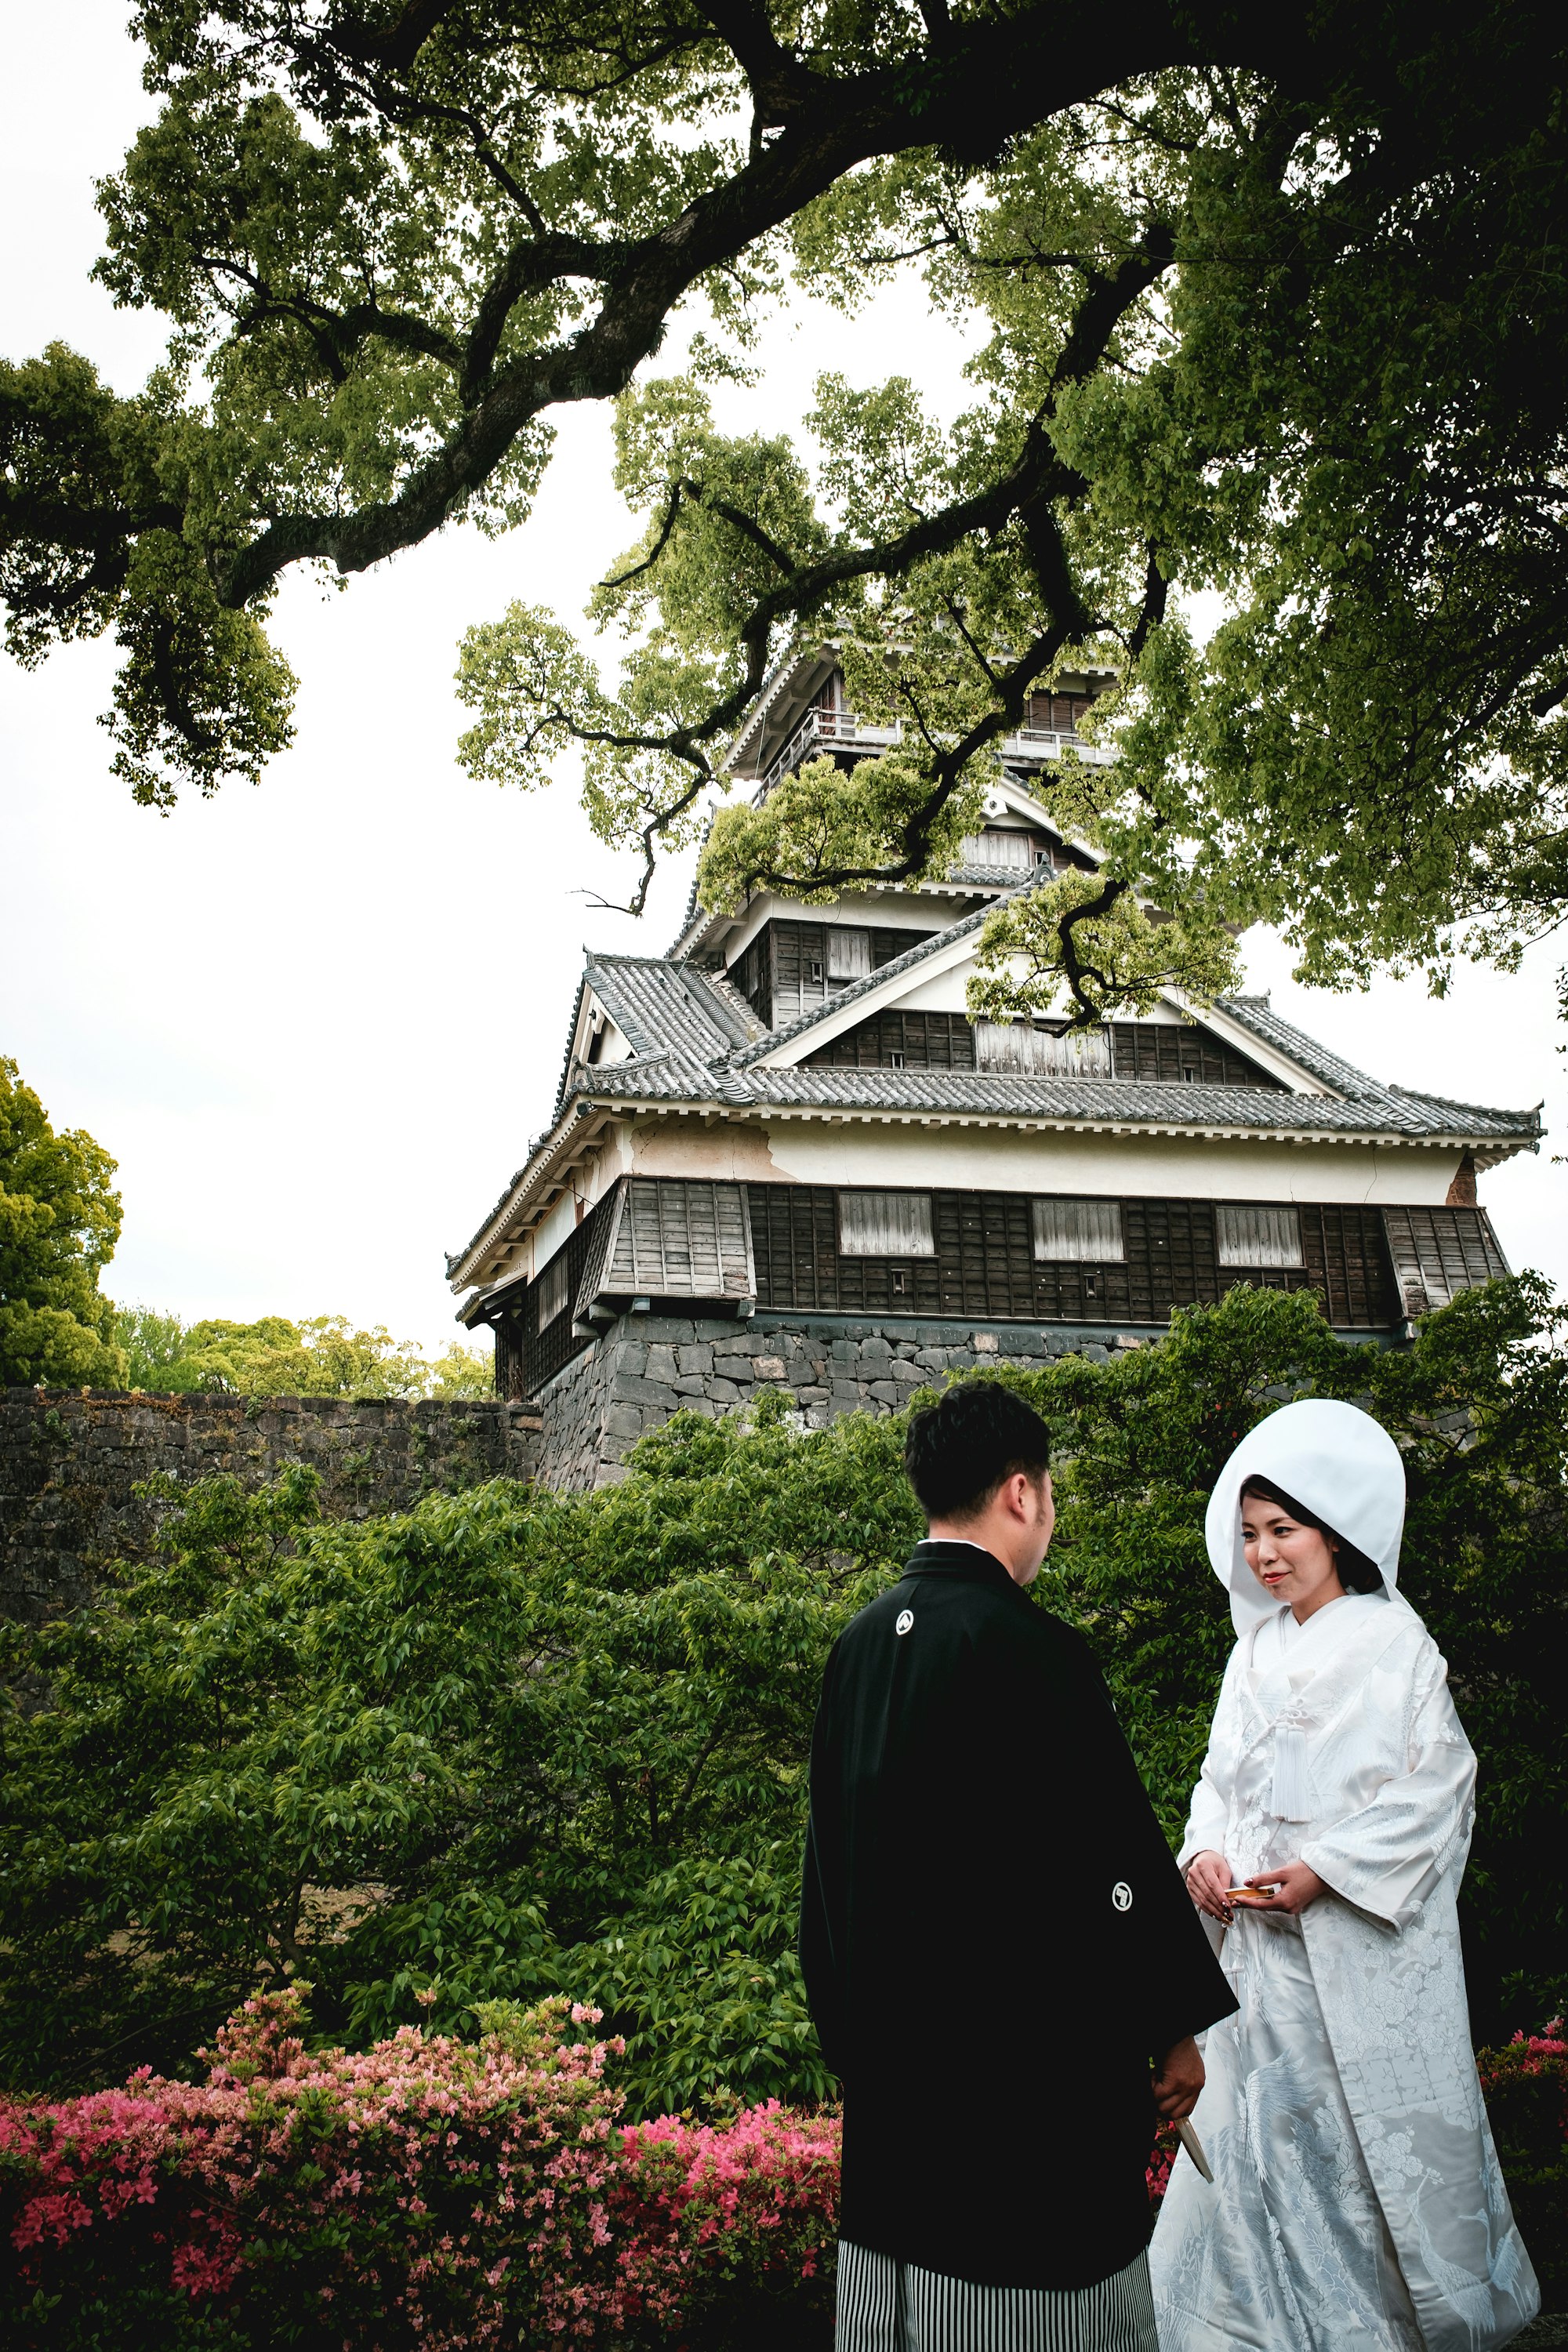 Wedding ceremony of a Japanese couples in Kimono